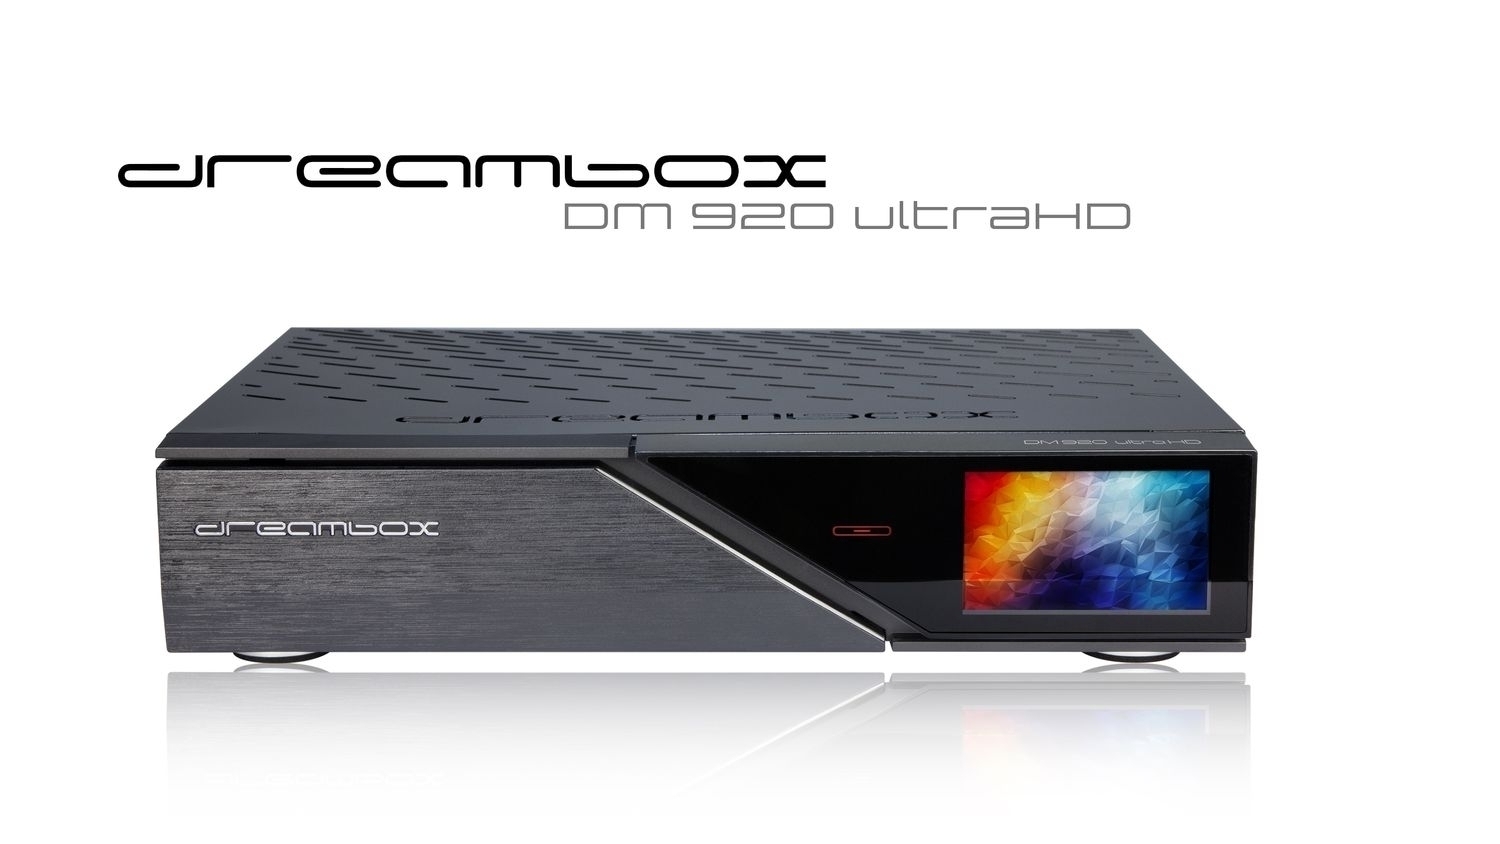 Dreambox DM920 UHD 4K 1x DVB-S2X MultiStream Dual Tuner E2 Linux PVR Receiver